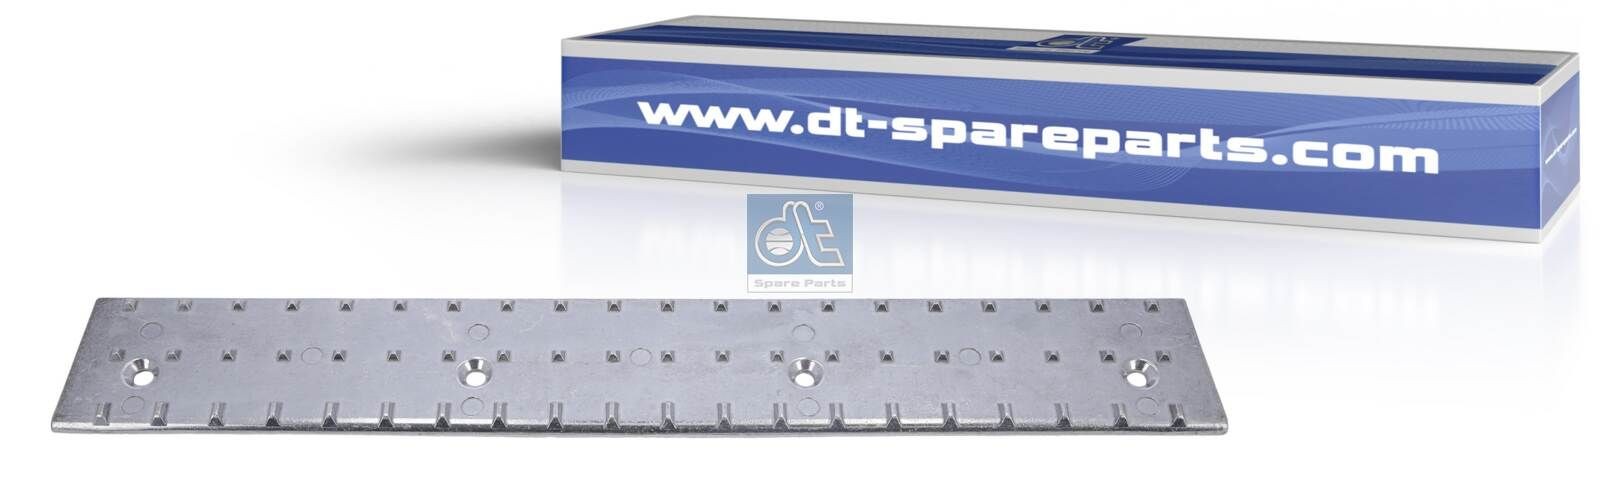 5.16094 DT Spare Parts Trittbrett DAF XF 105